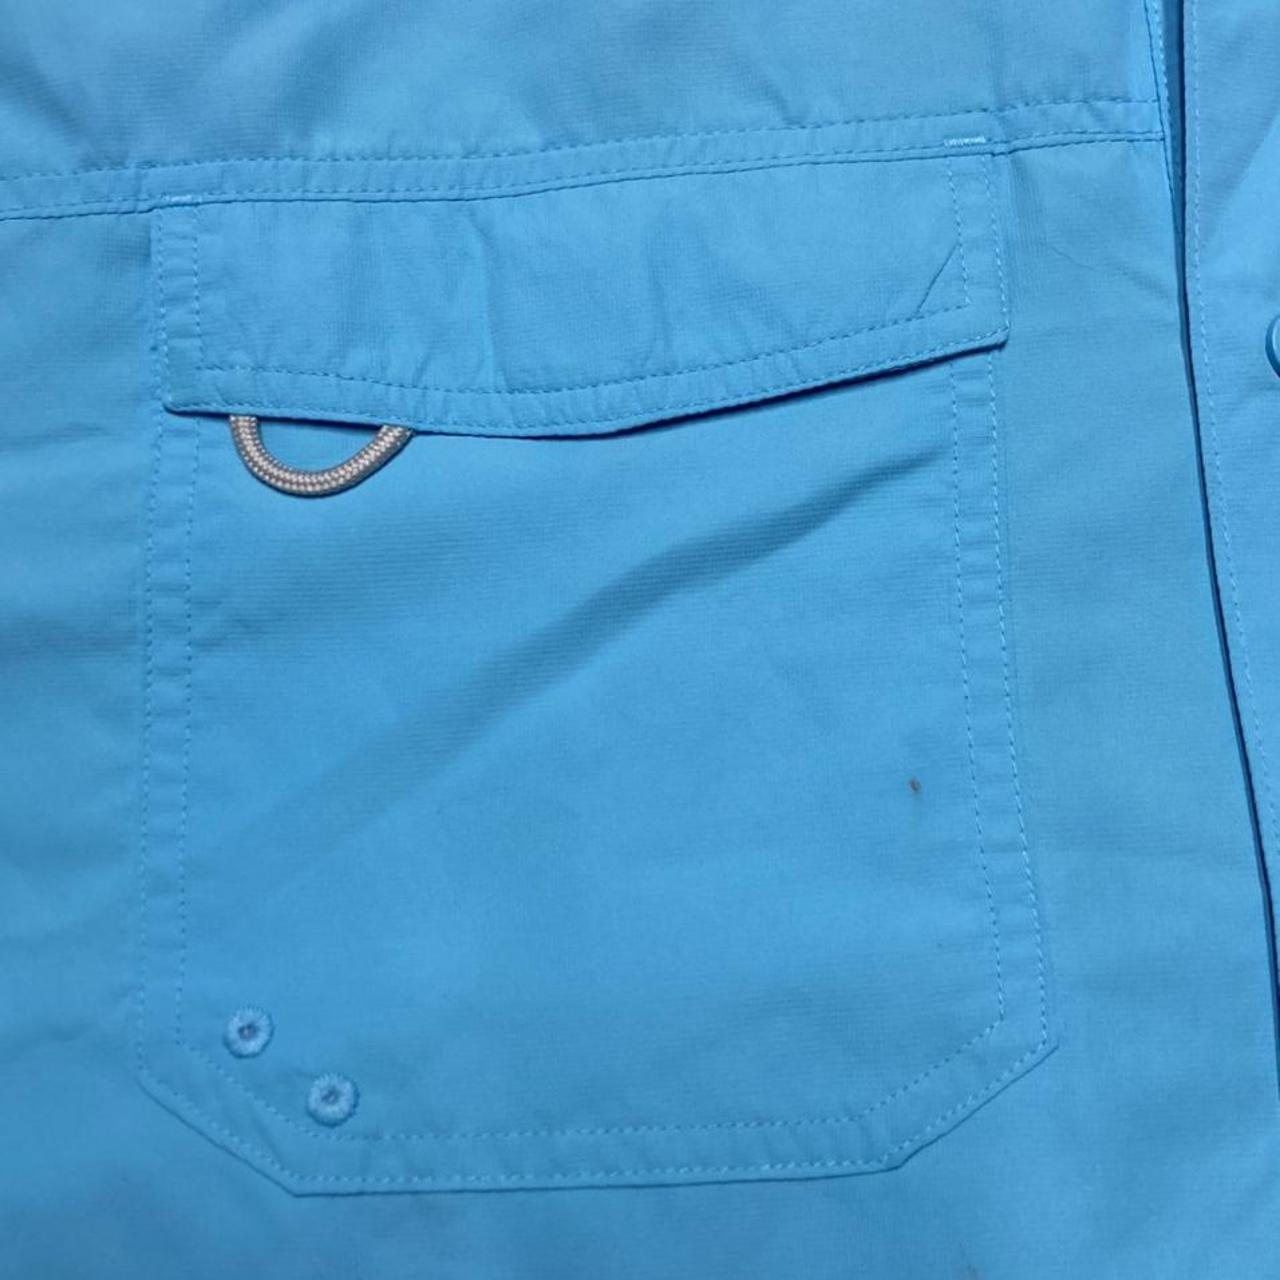 Realtree fishing shirt lightweight button vented - Depop